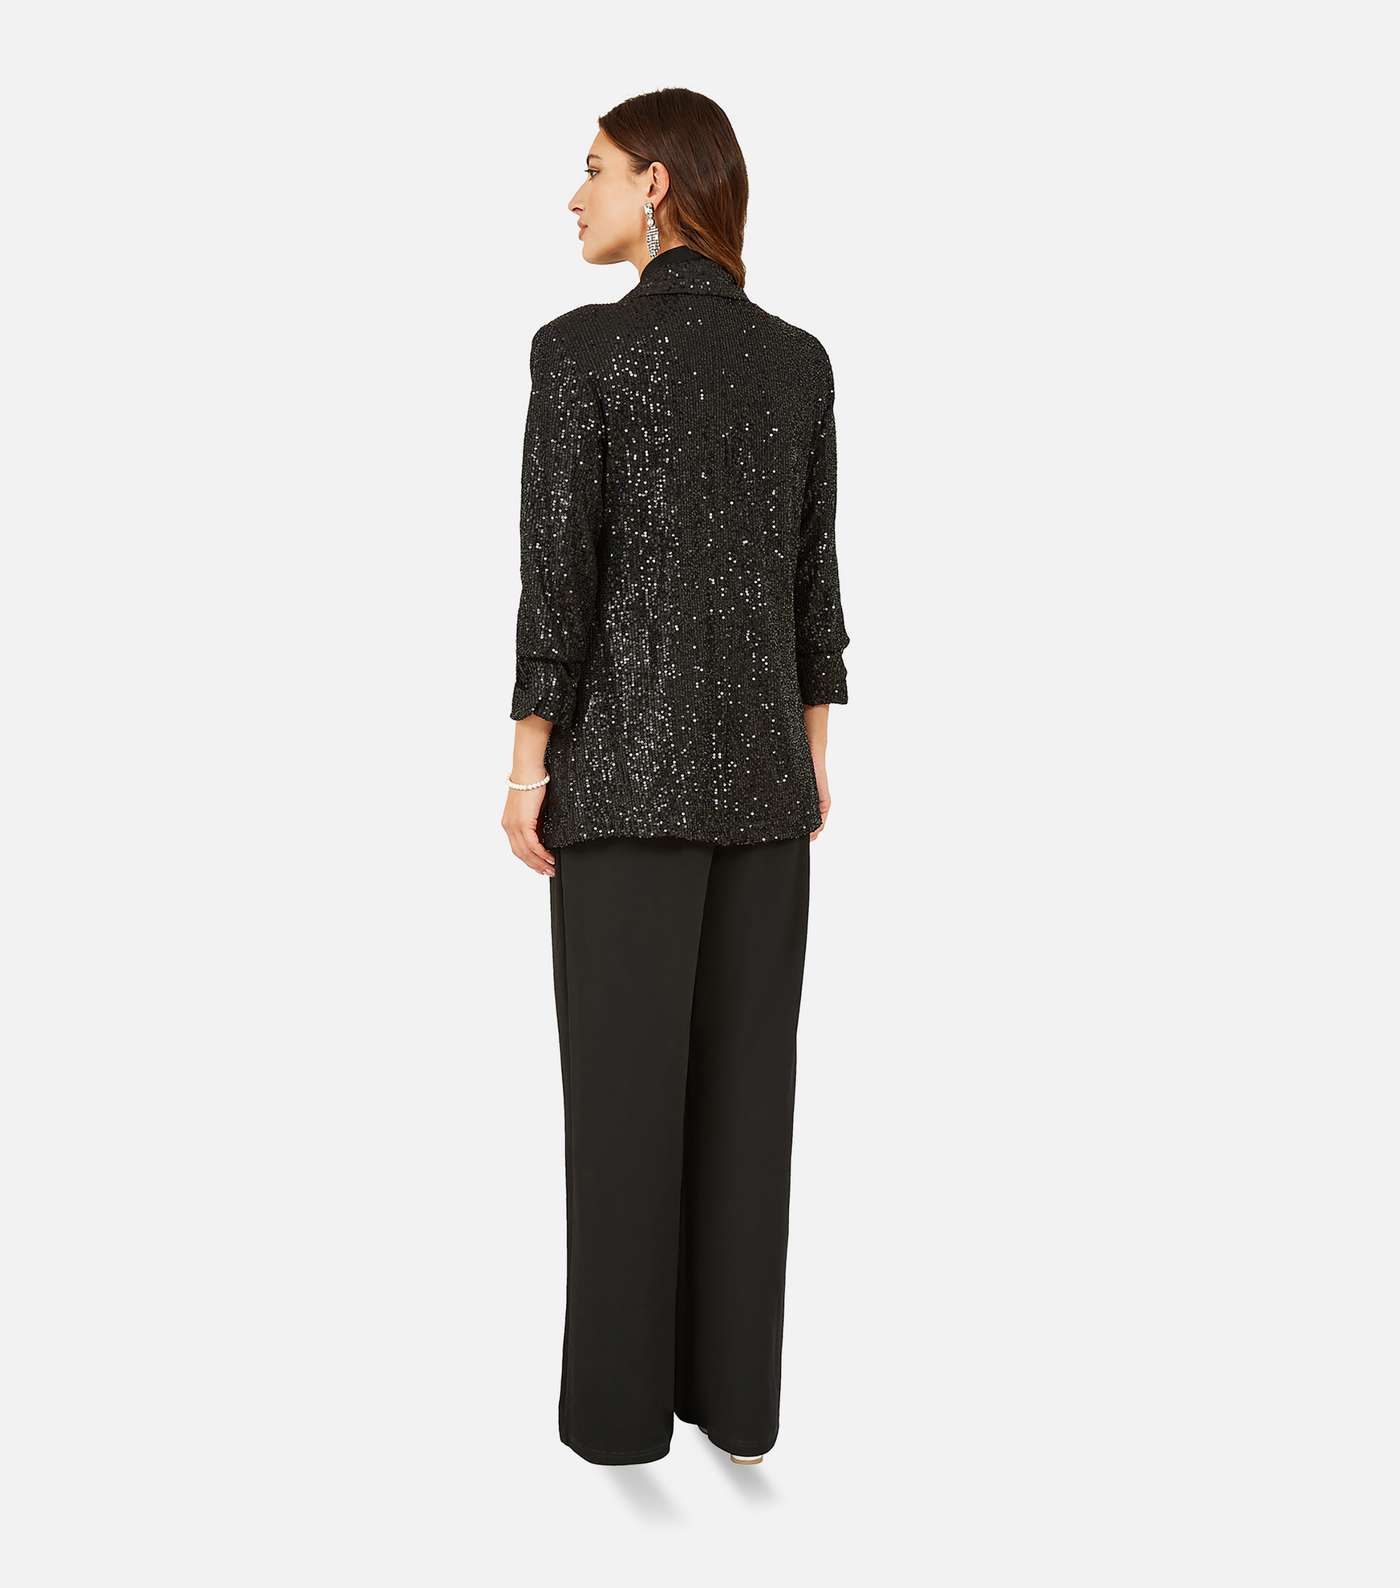 Yumi Black Sequin Blazer Image 4